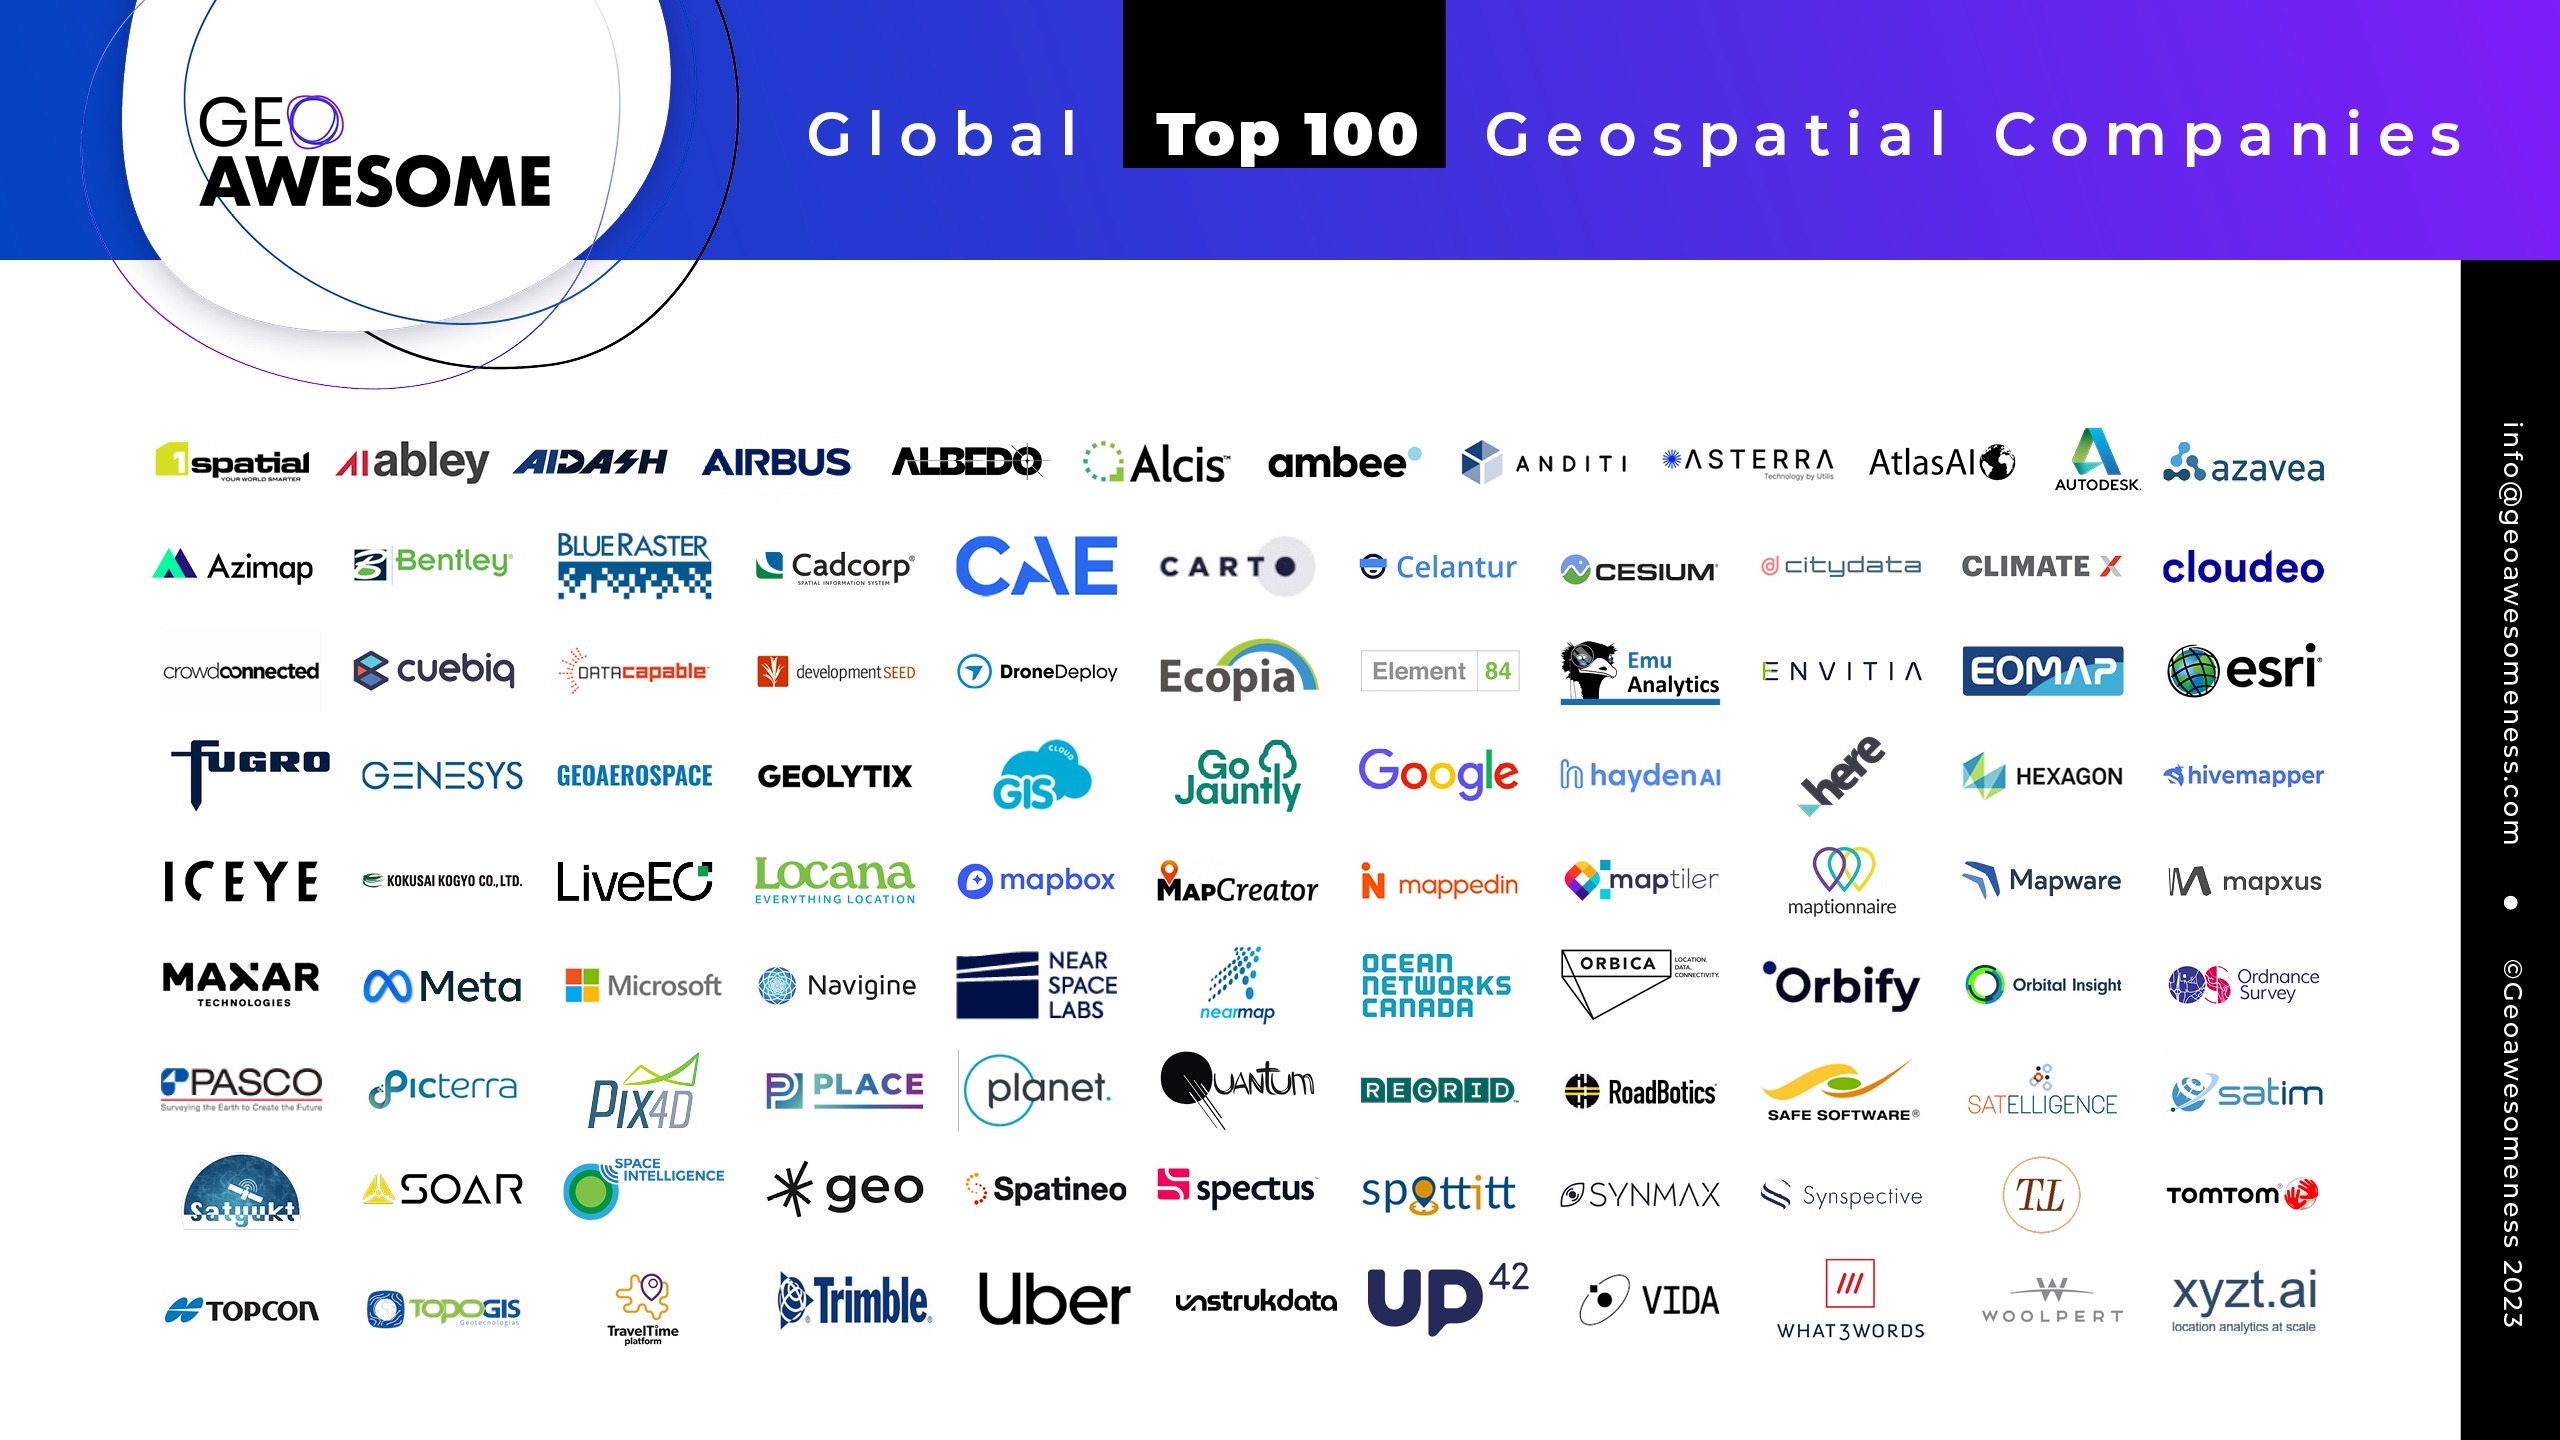 AiDash chosen in Global Top 100 Geospatial Companies